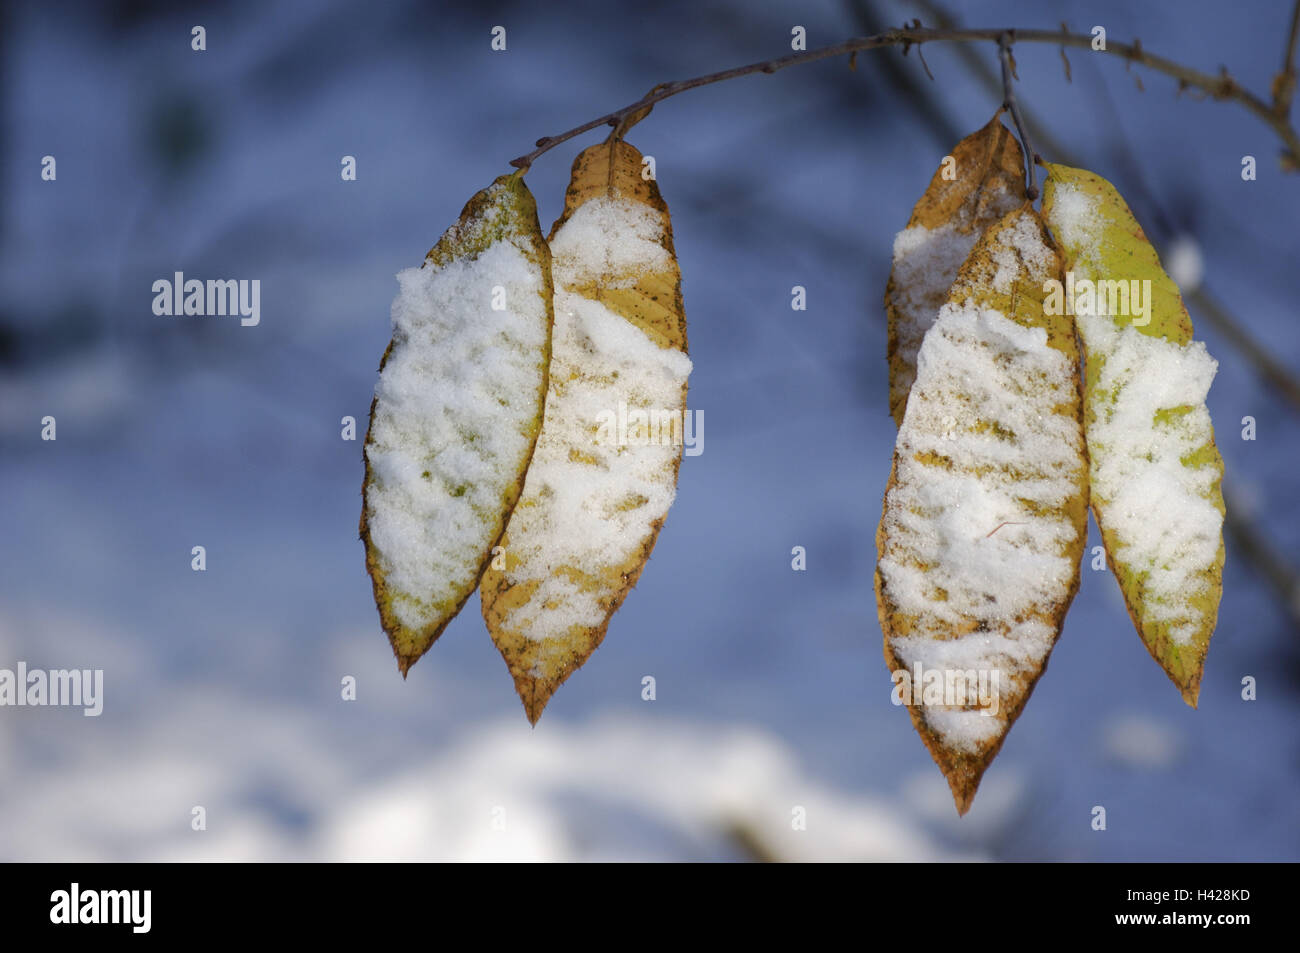 Sweet chestnut, eating chestnut, Castanea sativa, autumn foliage, snow, branch, winter Stock Photo